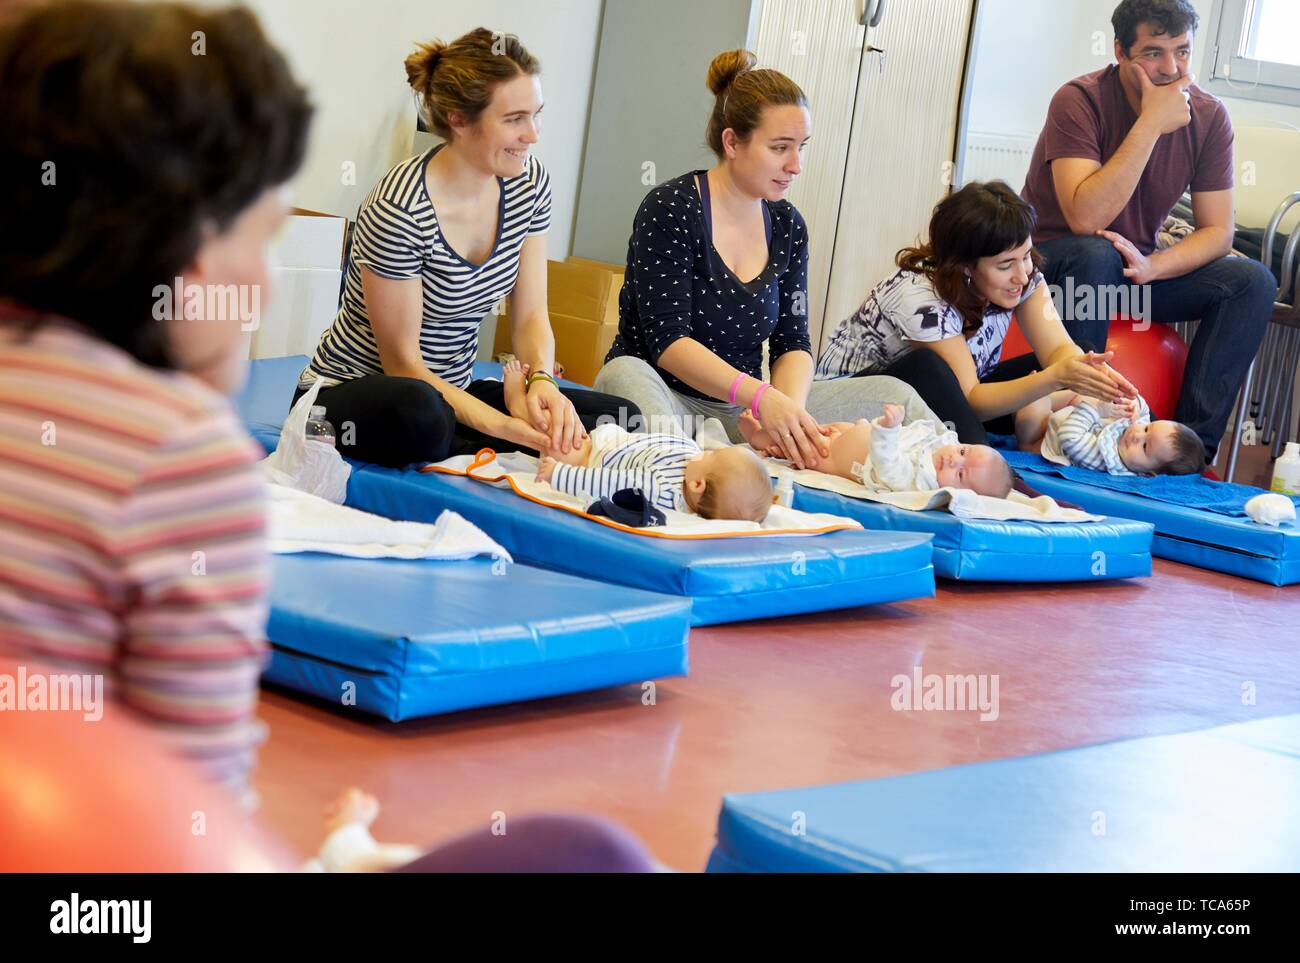 Matron instructing mothers in massage to babies, Health Center, Zarautz, Gipuzkoa, Basque Country, Spain Stock Photo